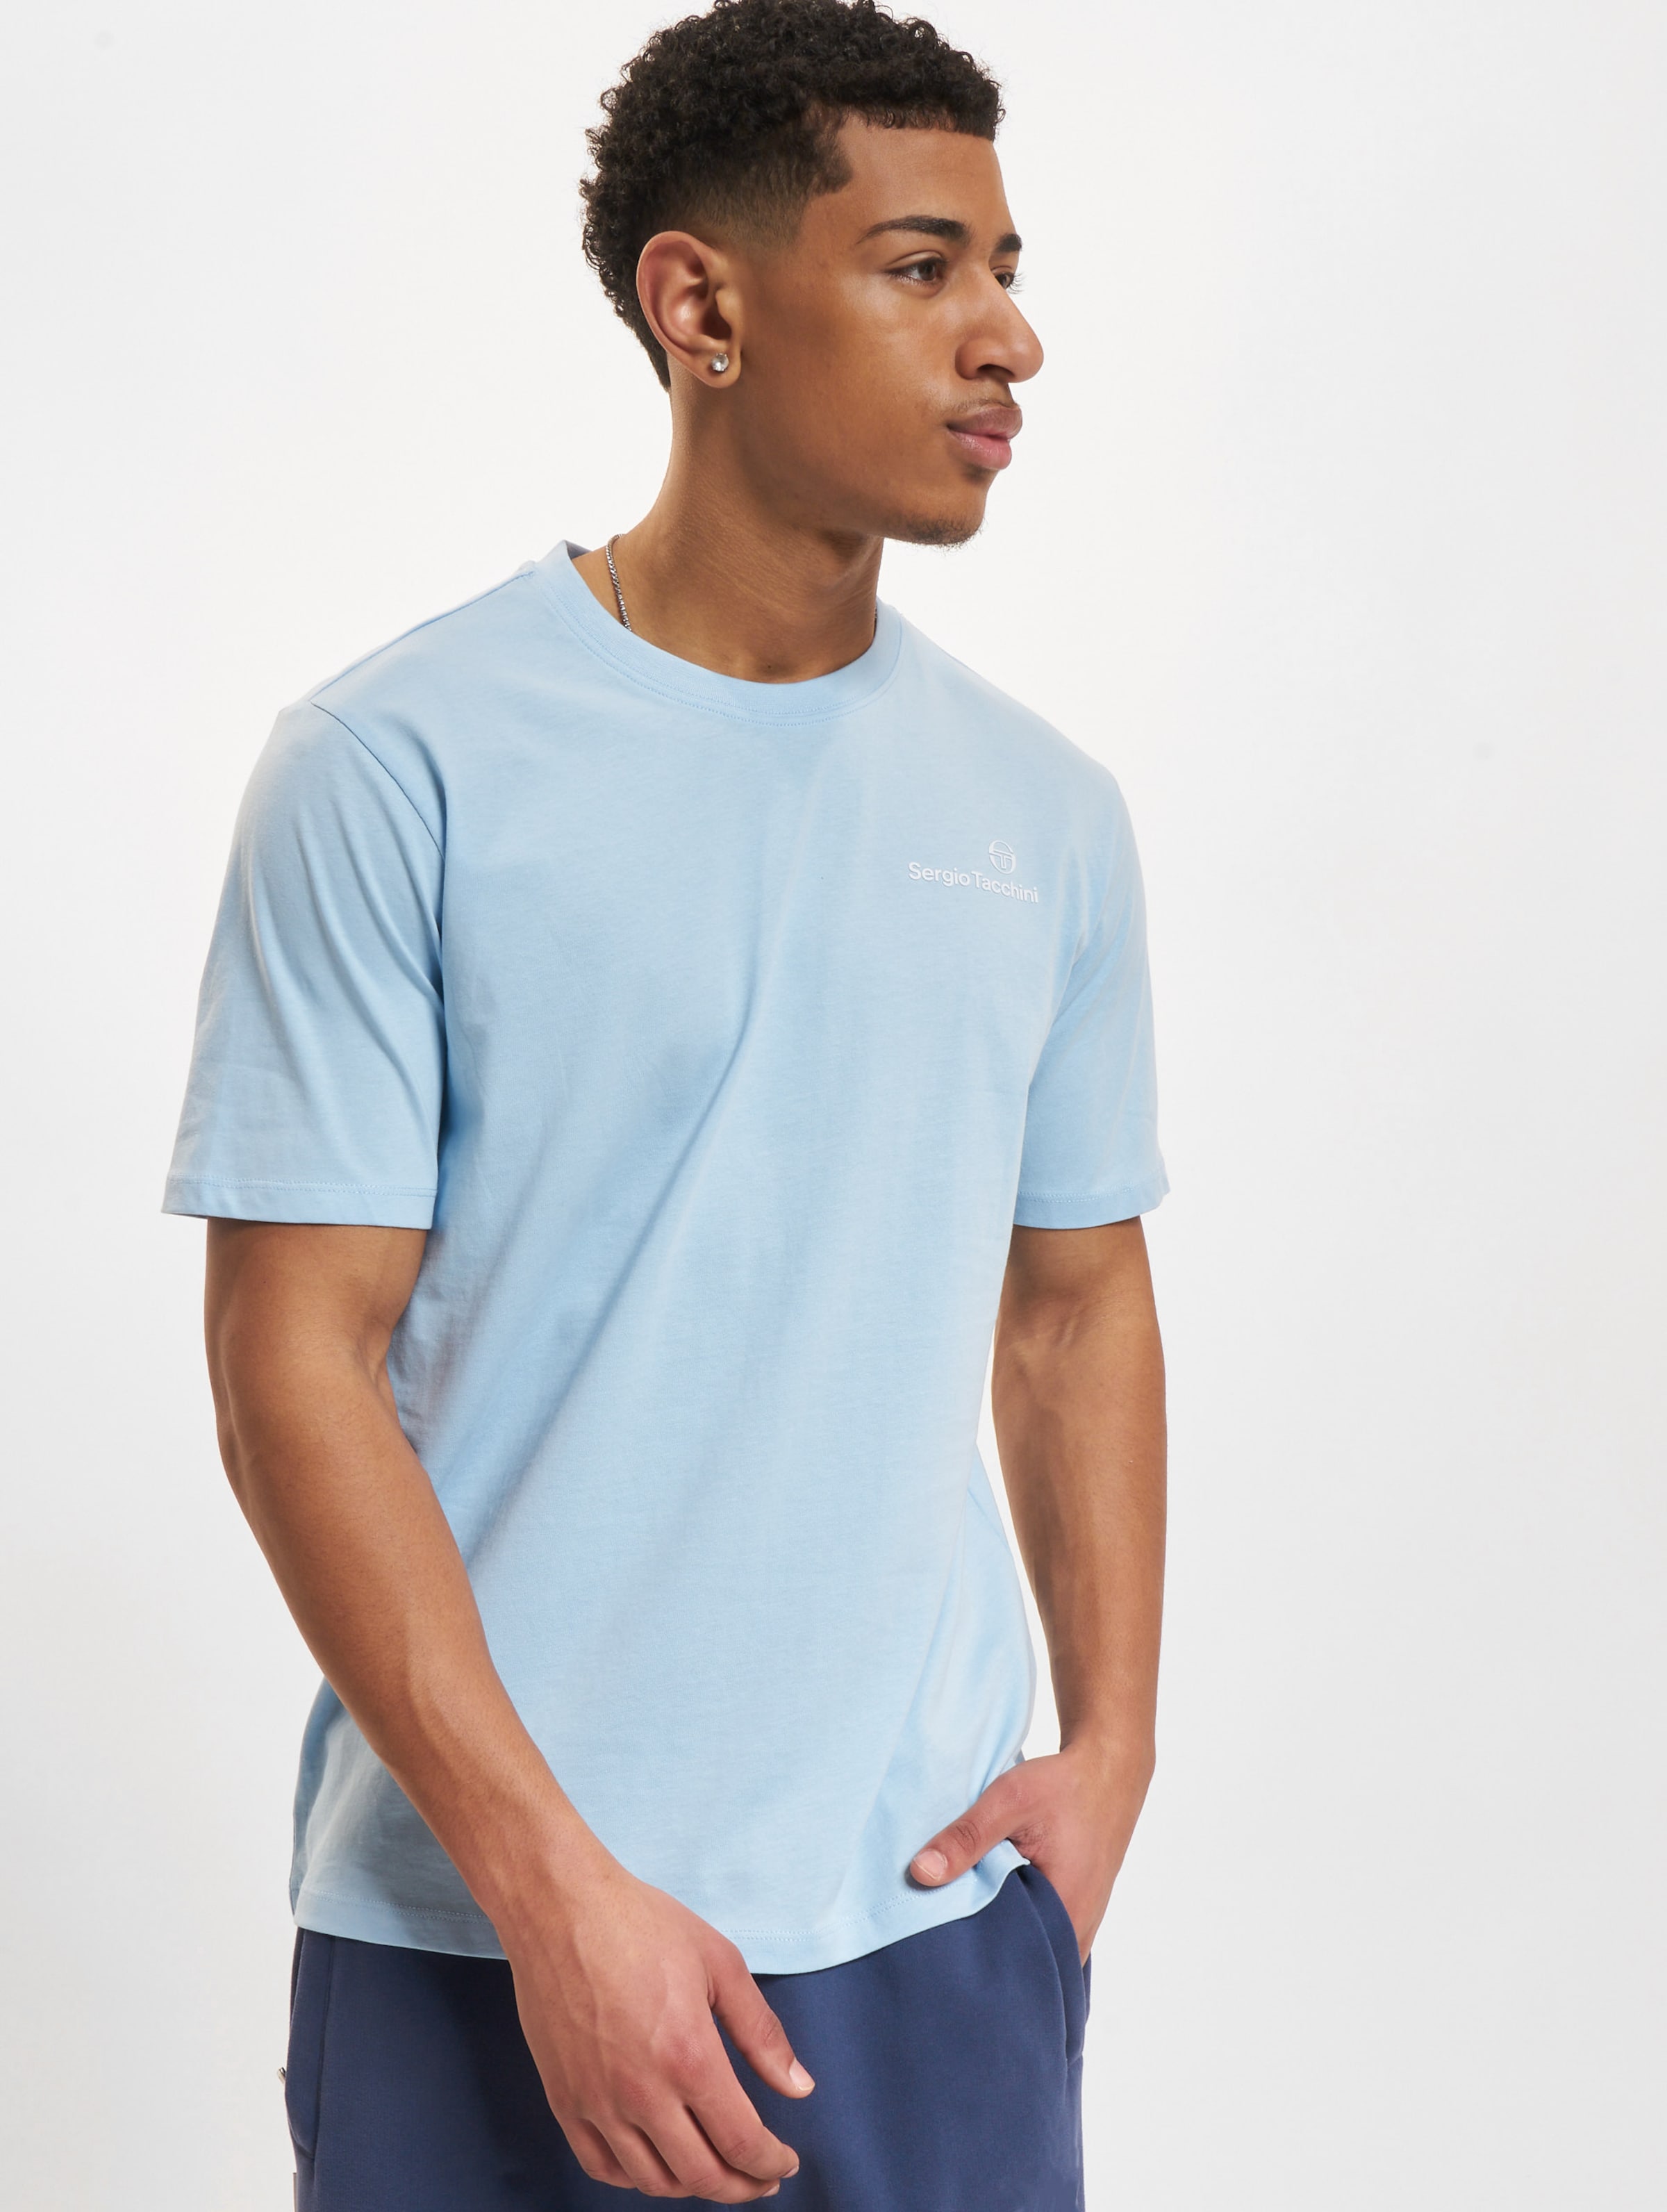 Sergio Tacchini Bold Co T-Shirt Mannen,Unisex op kleur blauw, Maat M